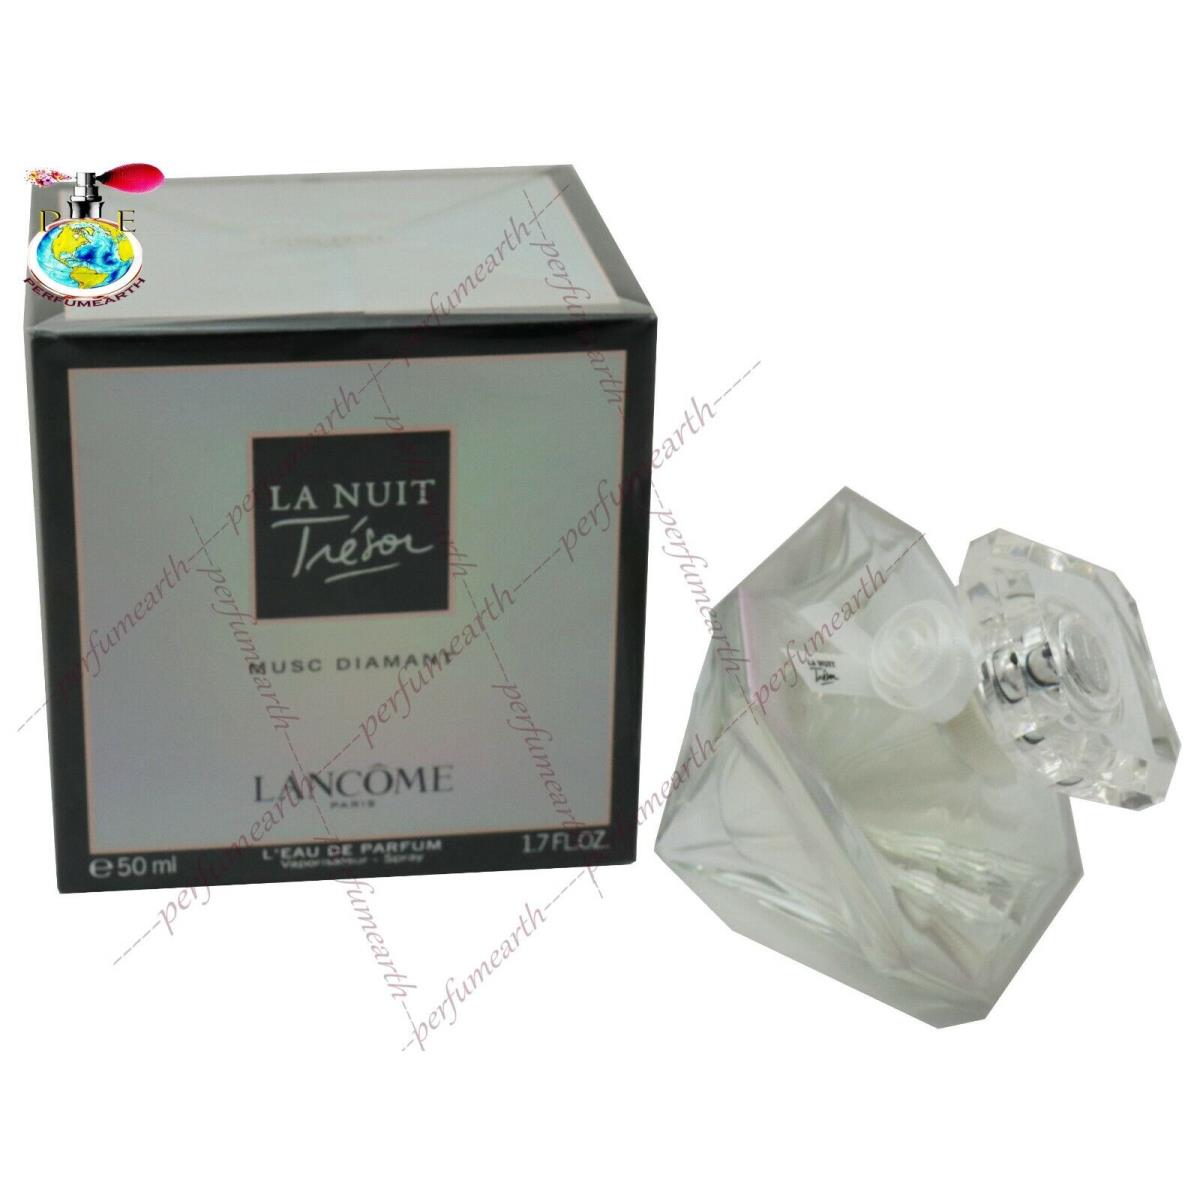 Lancome La Nuit Tresor Musc Diamant 1.7/1.6 oz Edp Spray For Women